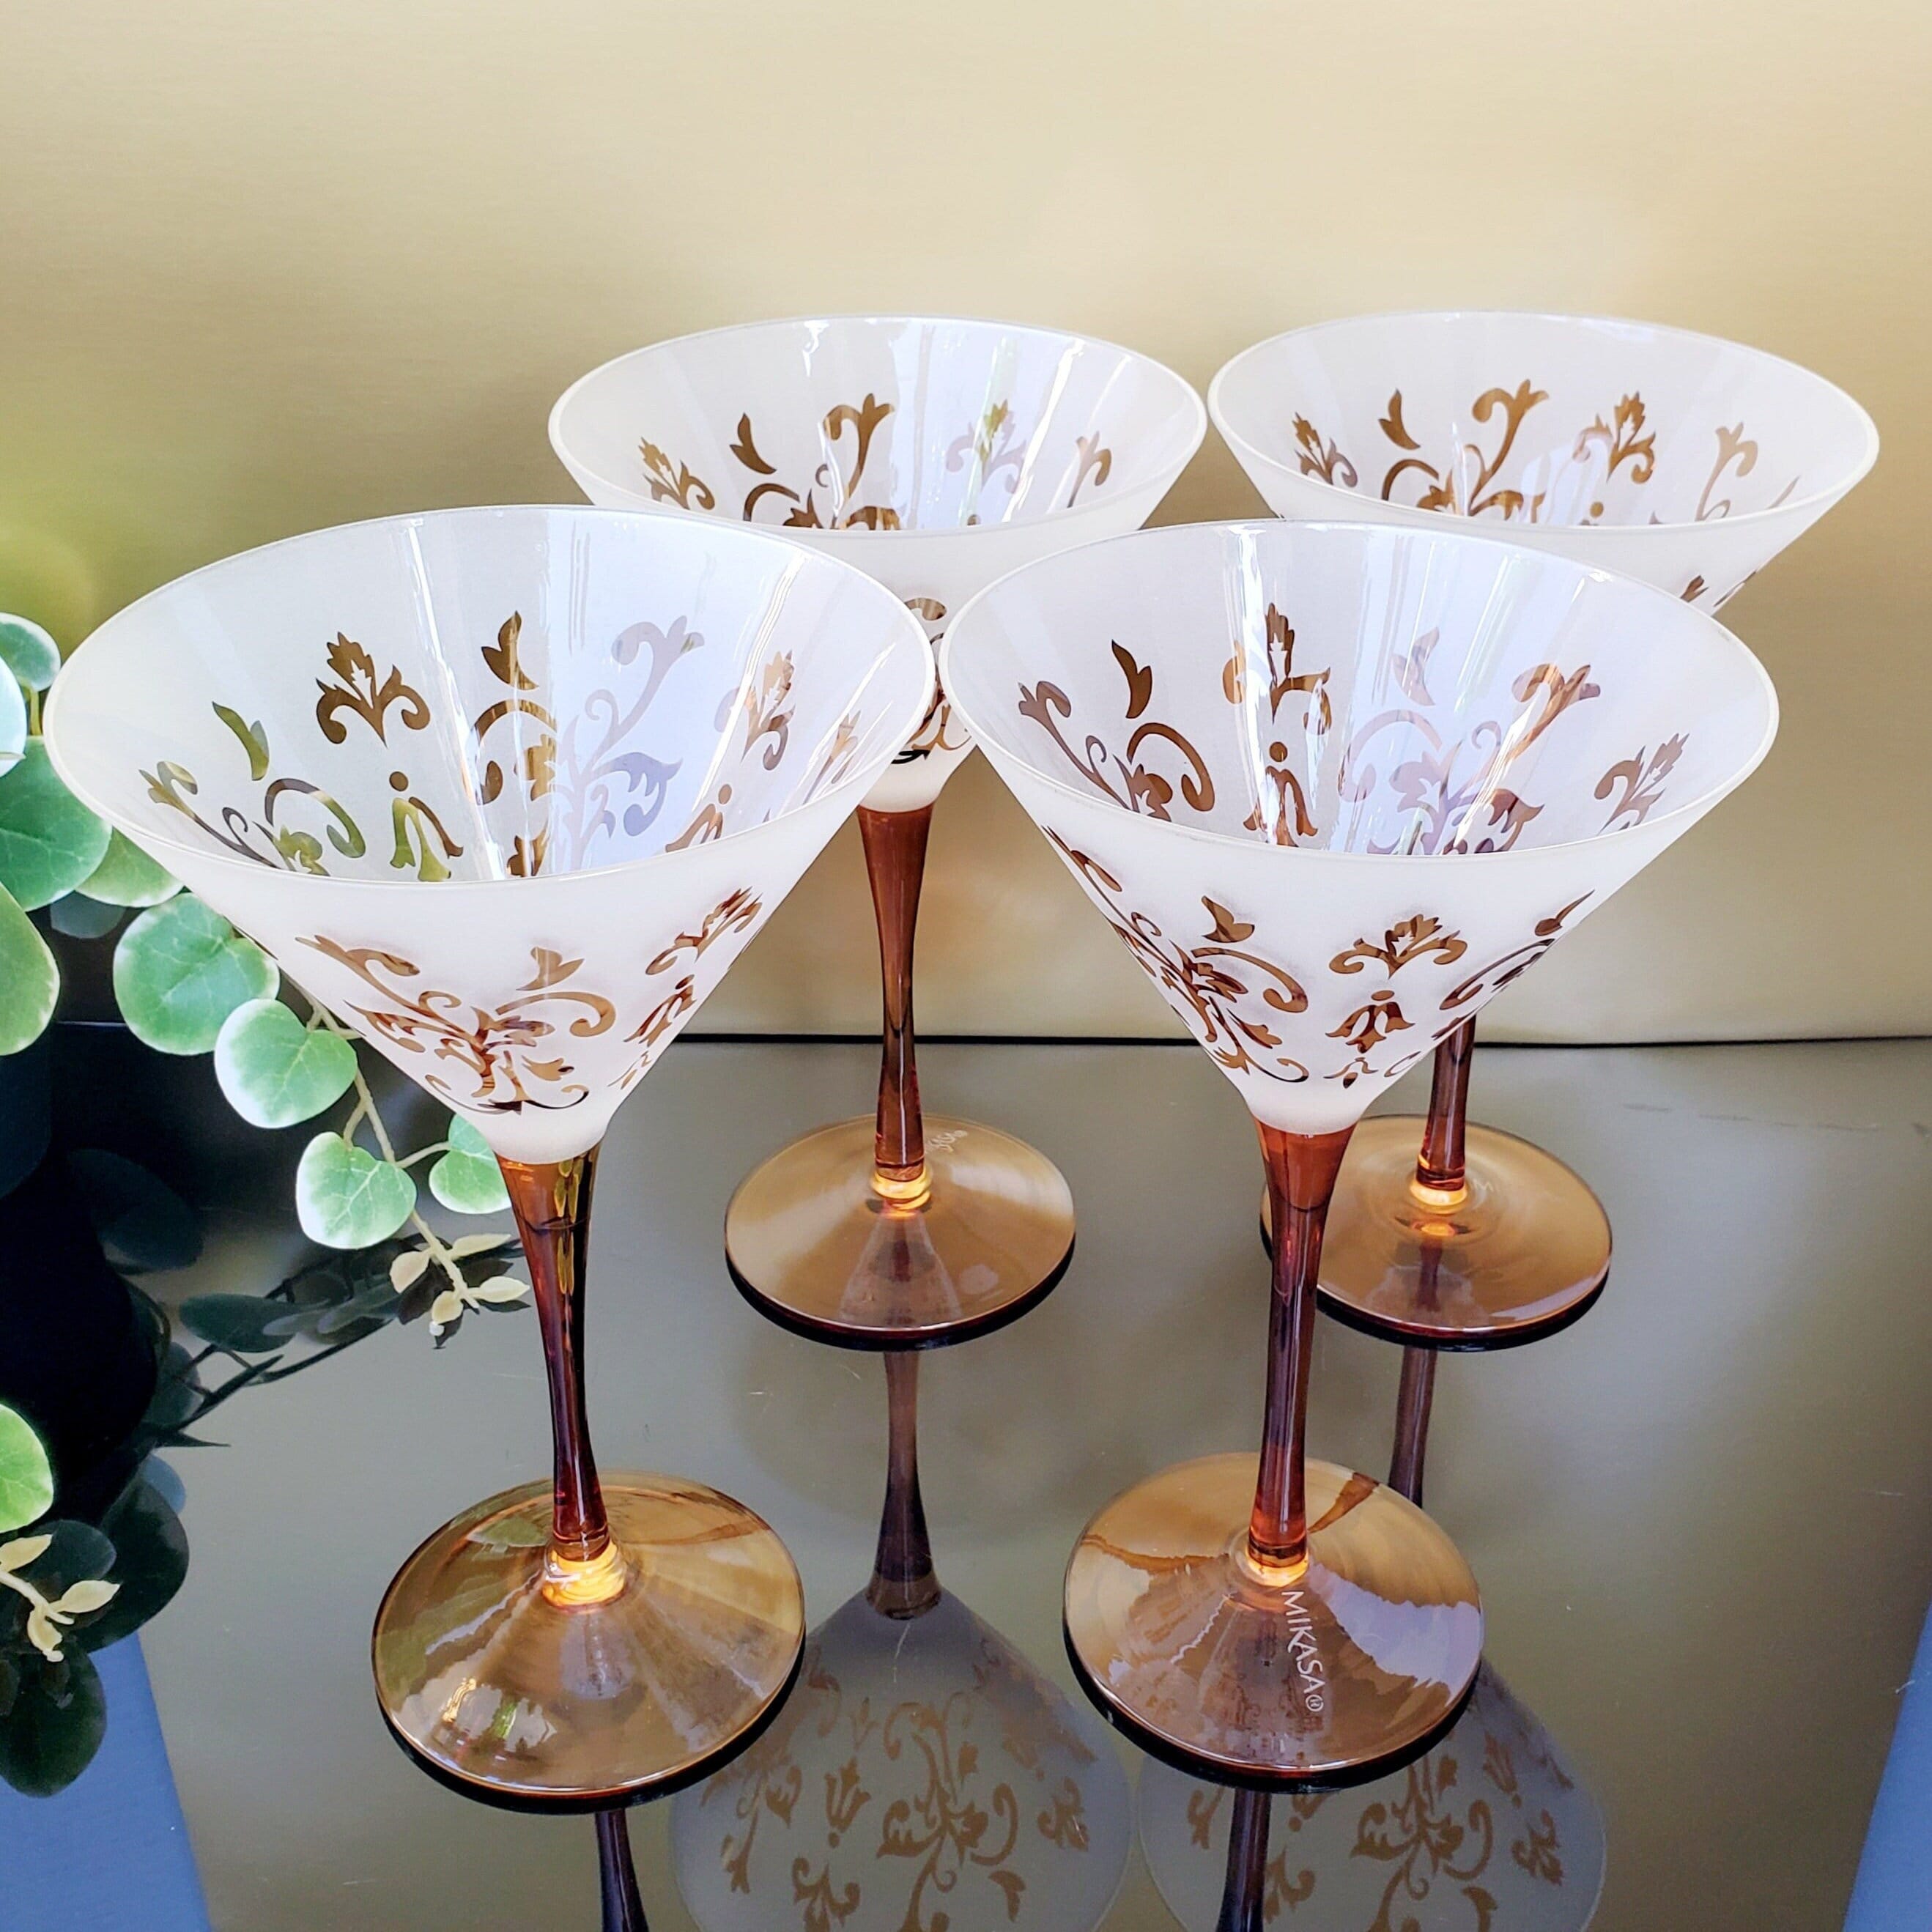 Mikasa Cheers Stemless Martini Glasses Set of 4